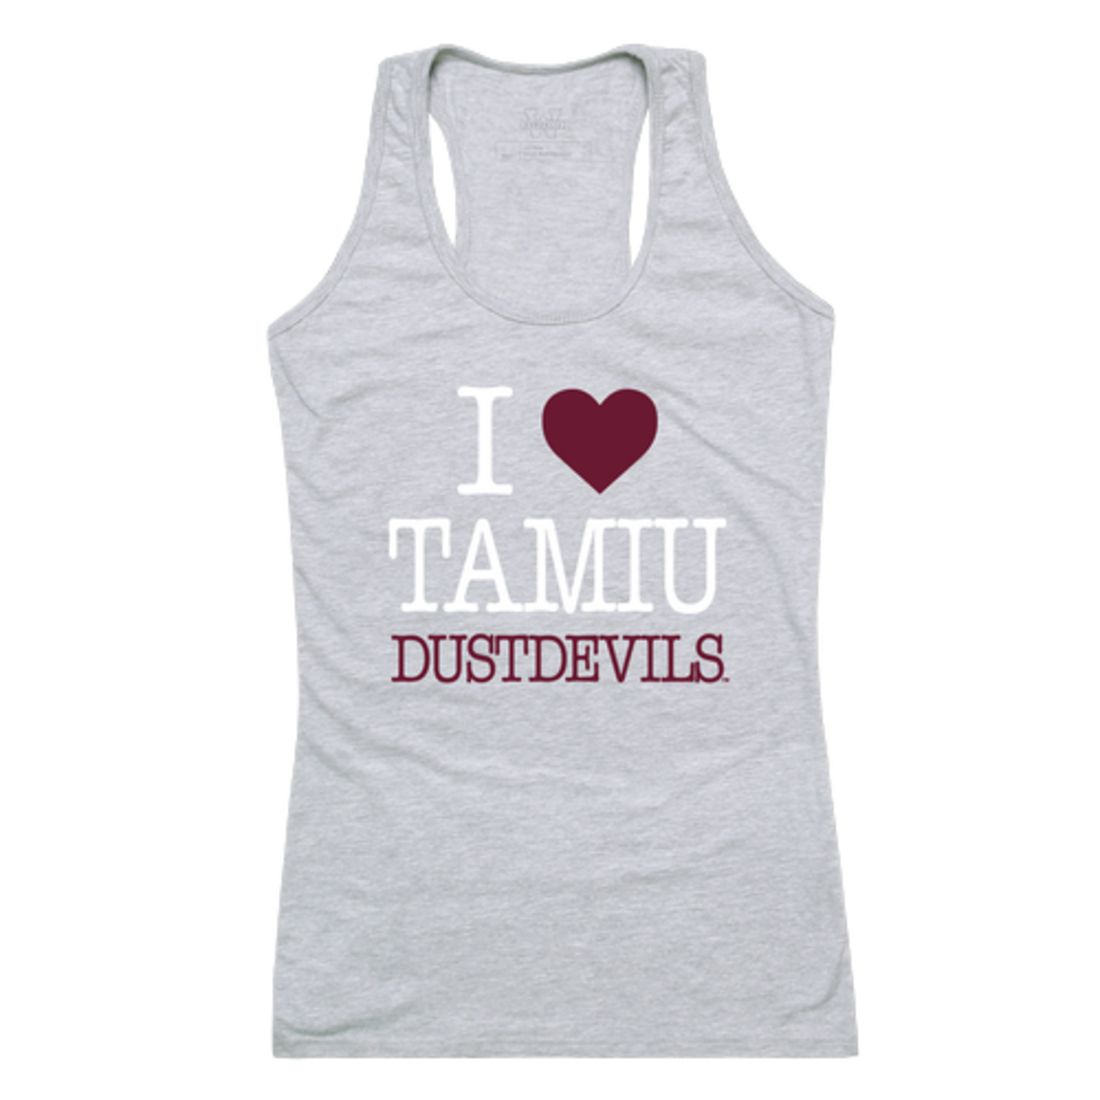 I Love Texas A&M International University DustDevils Womens Tank Top